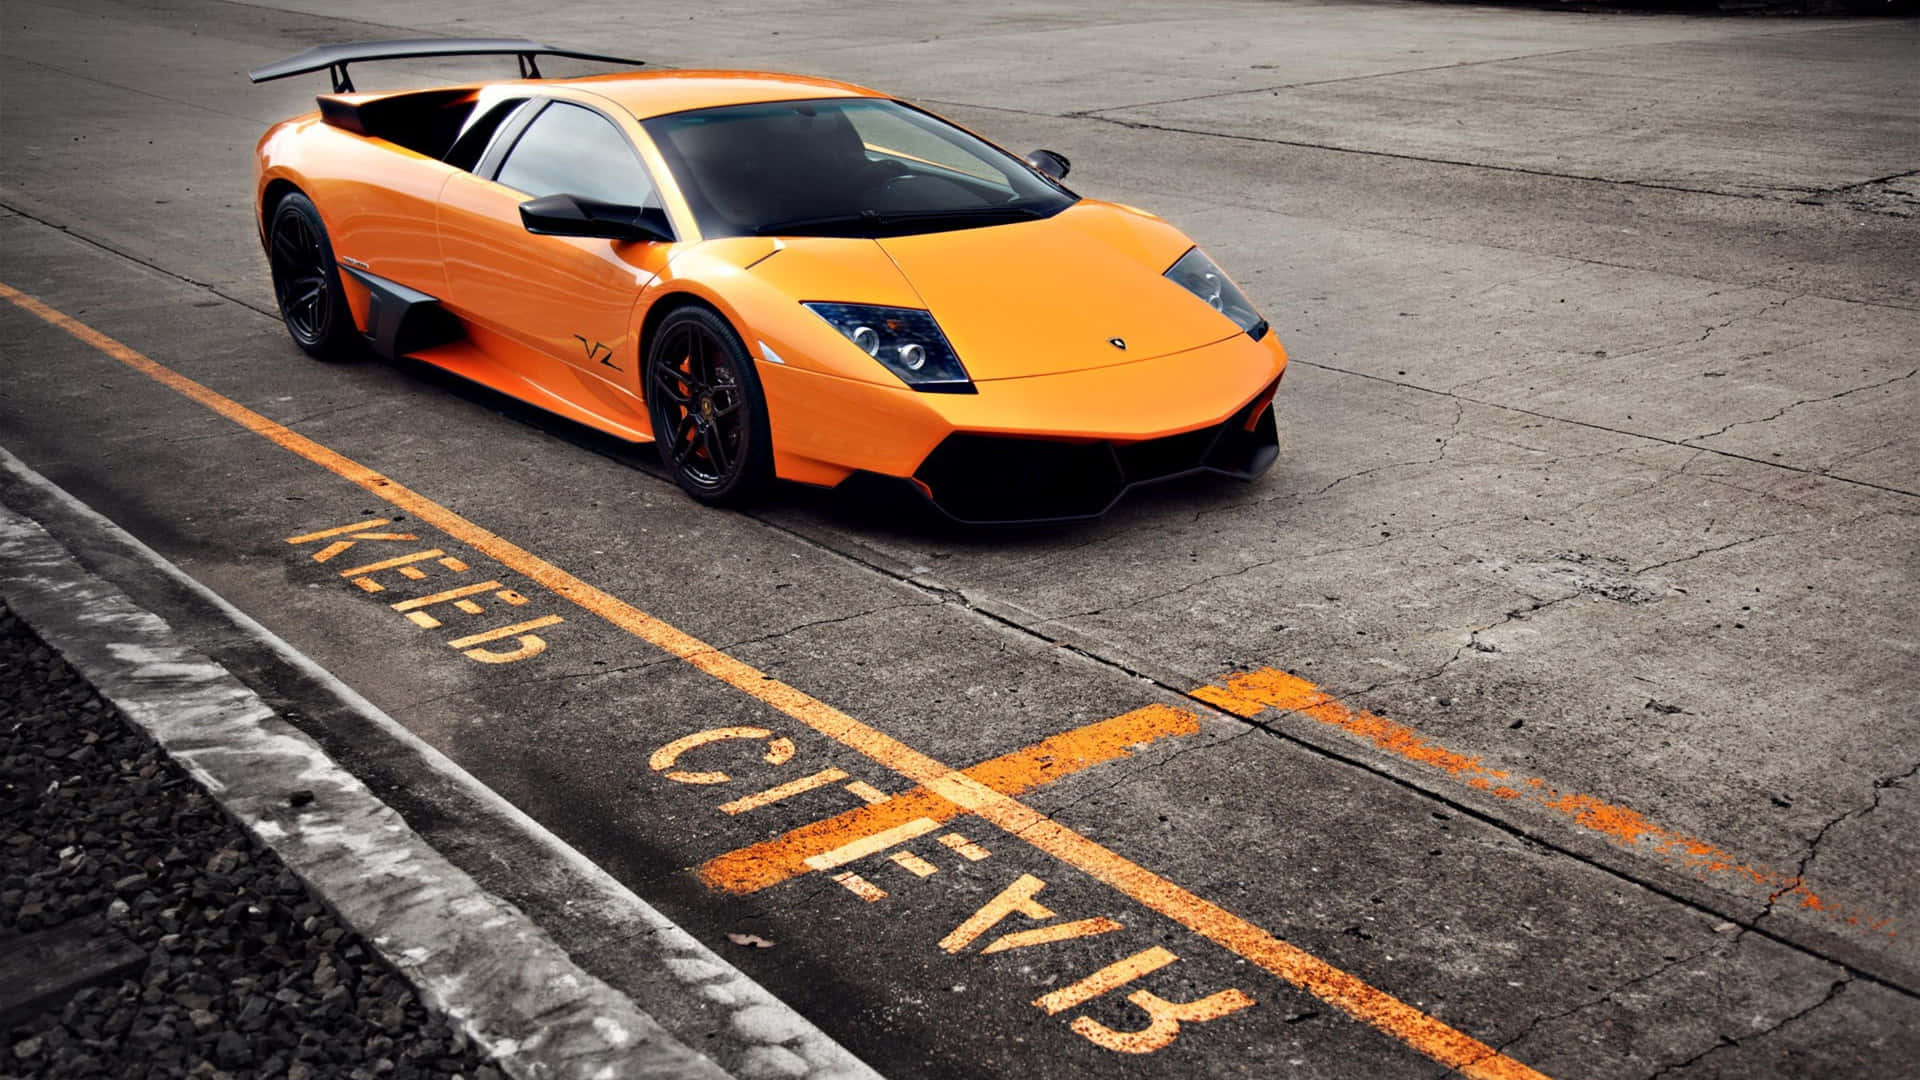 Stunning Lamborghini Murcielago in action Wallpaper